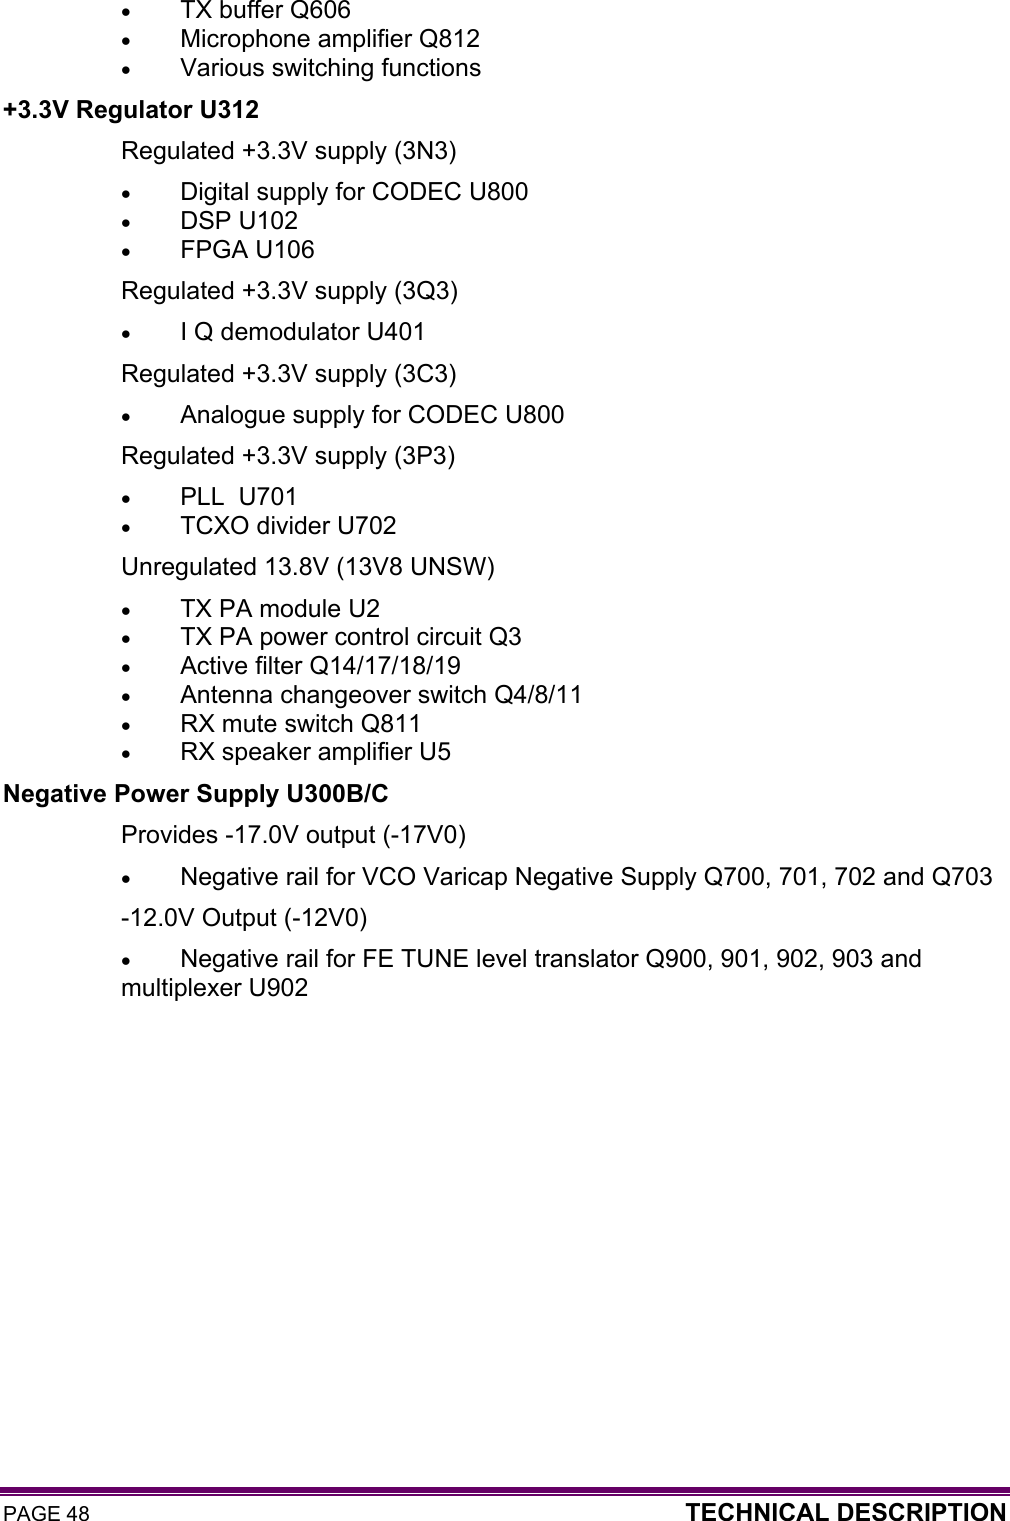 PAGE 48  TECHNICAL DESCRIPTION  • TX buffer Q606 • Microphone amplifier Q812 • Various switching functions +3.3V Regulator U312 Regulated +3.3V supply (3N3) • Digital supply for CODEC U800 • DSP U102 • FPGA U106 Regulated +3.3V supply (3Q3) • I Q demodulator U401 Regulated +3.3V supply (3C3) • Analogue supply for CODEC U800 Regulated +3.3V supply (3P3) • PLL  U701 • TCXO divider U702 Unregulated 13.8V (13V8 UNSW) • TX PA module U2 • TX PA power control circuit Q3 • Active filter Q14/17/18/19 • Antenna changeover switch Q4/8/11 • RX mute switch Q811 • RX speaker amplifier U5 Negative Power Supply U300B/C Provides -17.0V output (-17V0) • Negative rail for VCO Varicap Negative Supply Q700, 701, 702 and Q703  -12.0V Output (-12V0) • Negative rail for FE TUNE level translator Q900, 901, 902, 903 and multiplexer U902  